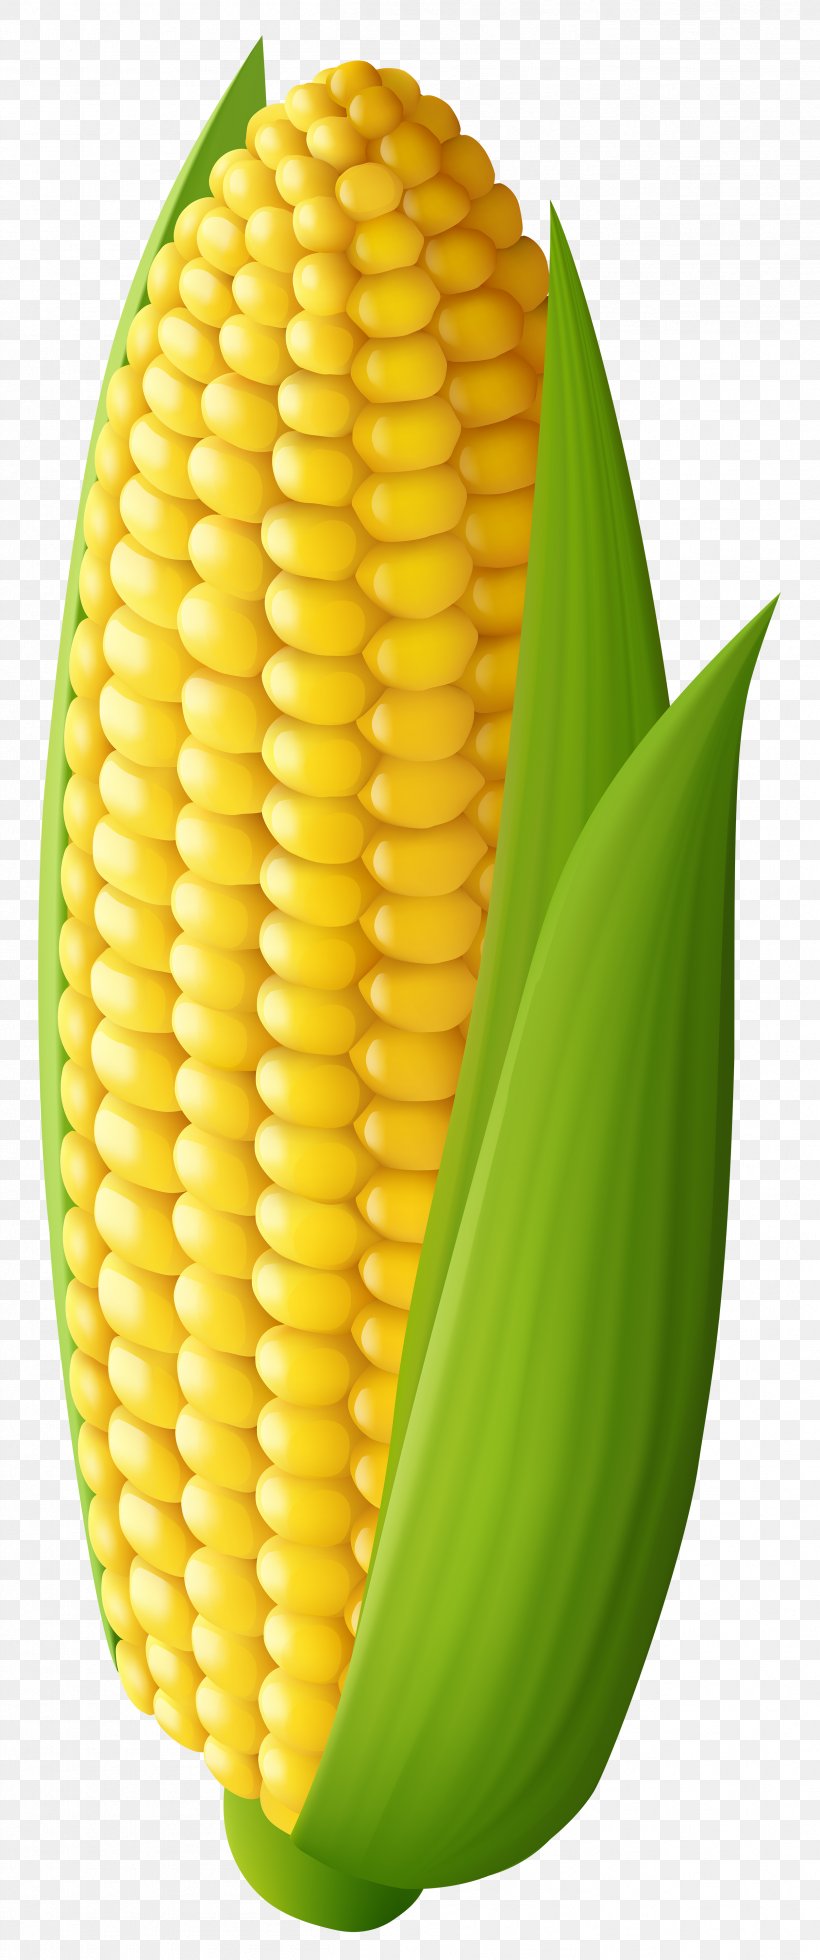 Corn On The Cob Maize Sweet Corn Clip Art, PNG, 2509x6000px, Corn On The Cob, Commodity, Corn Kernels, Corncob, Drawing Download Free